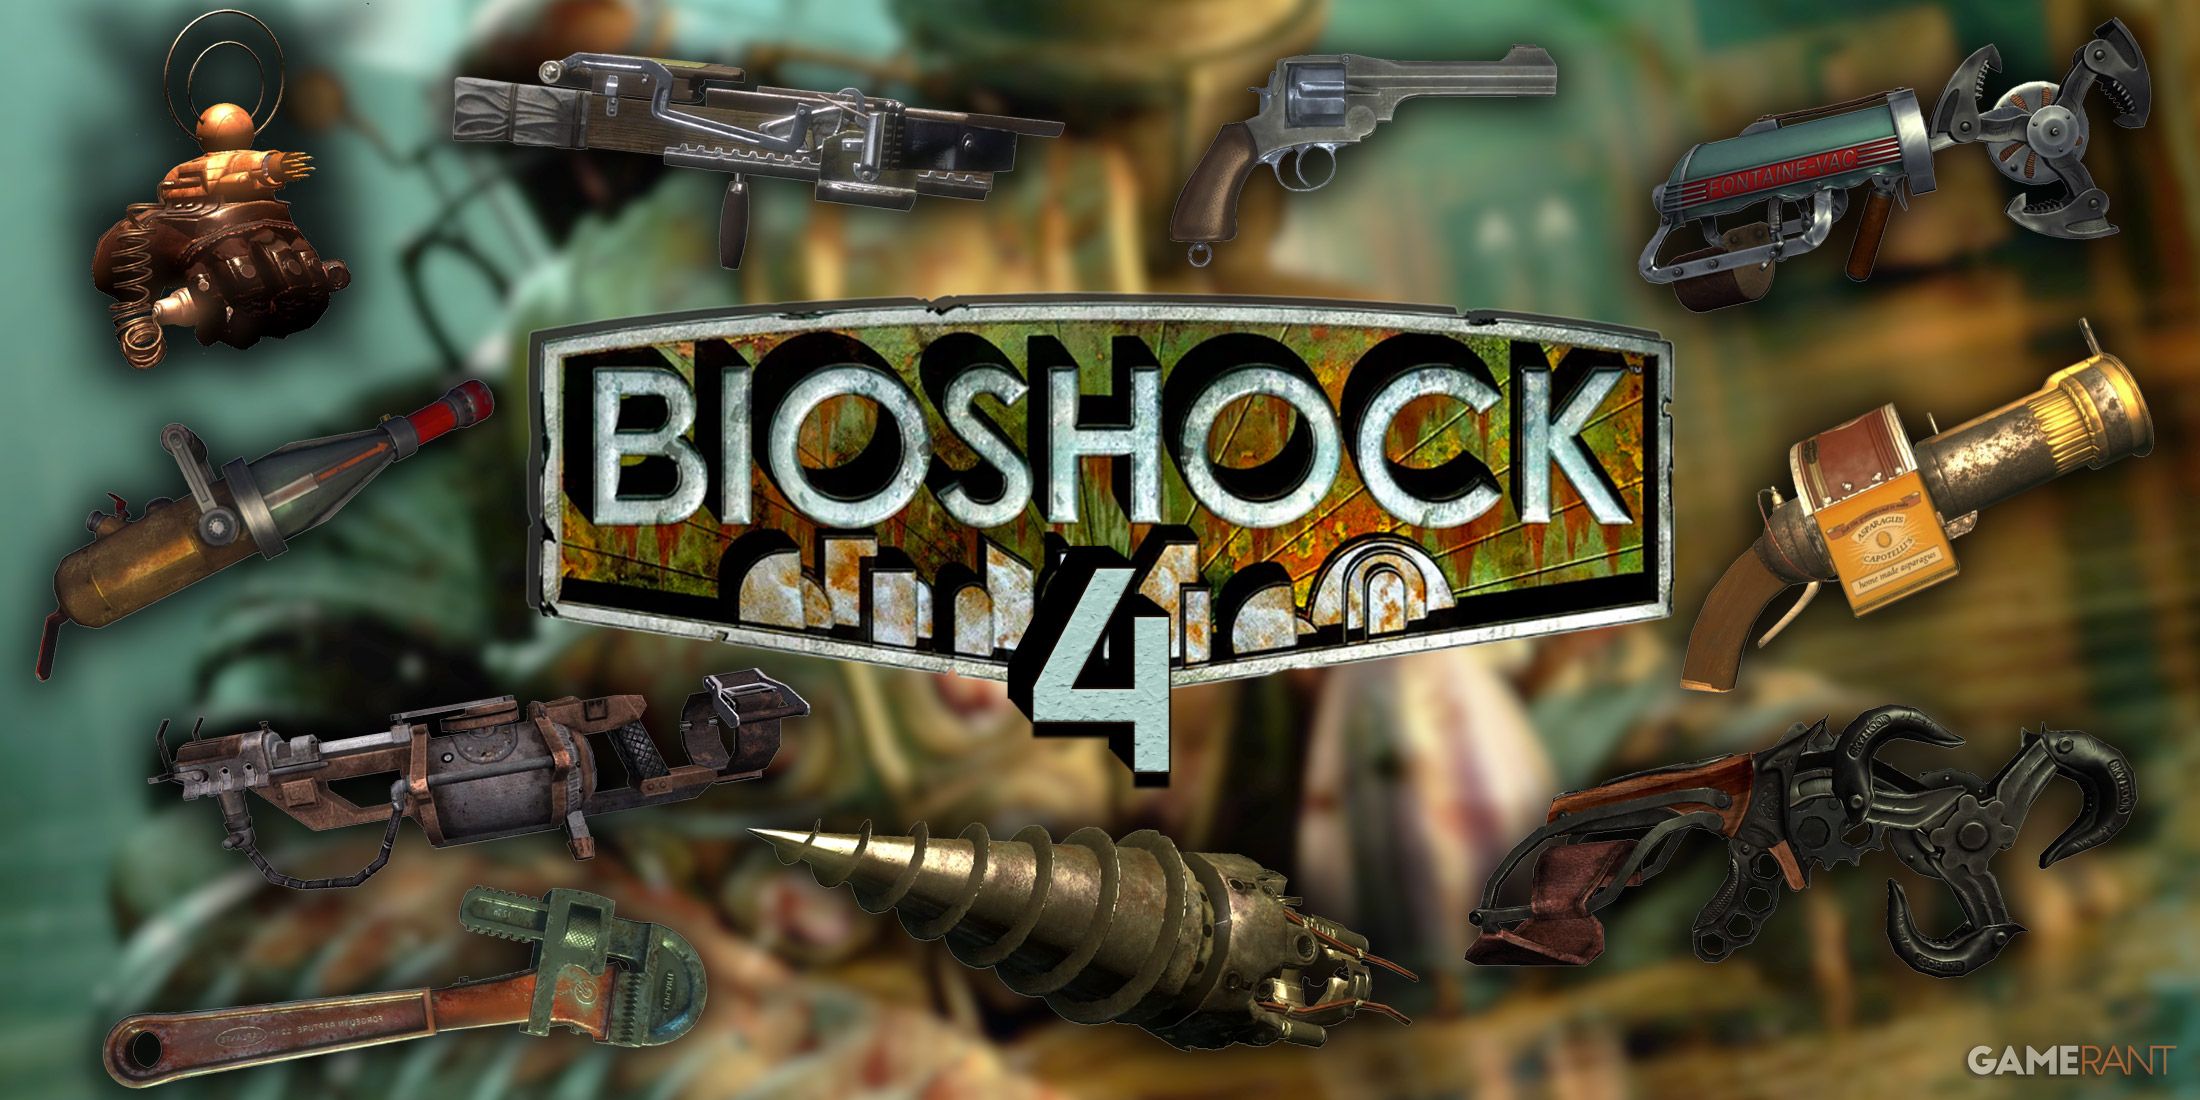 Bioshock 4 Weapon Crafting